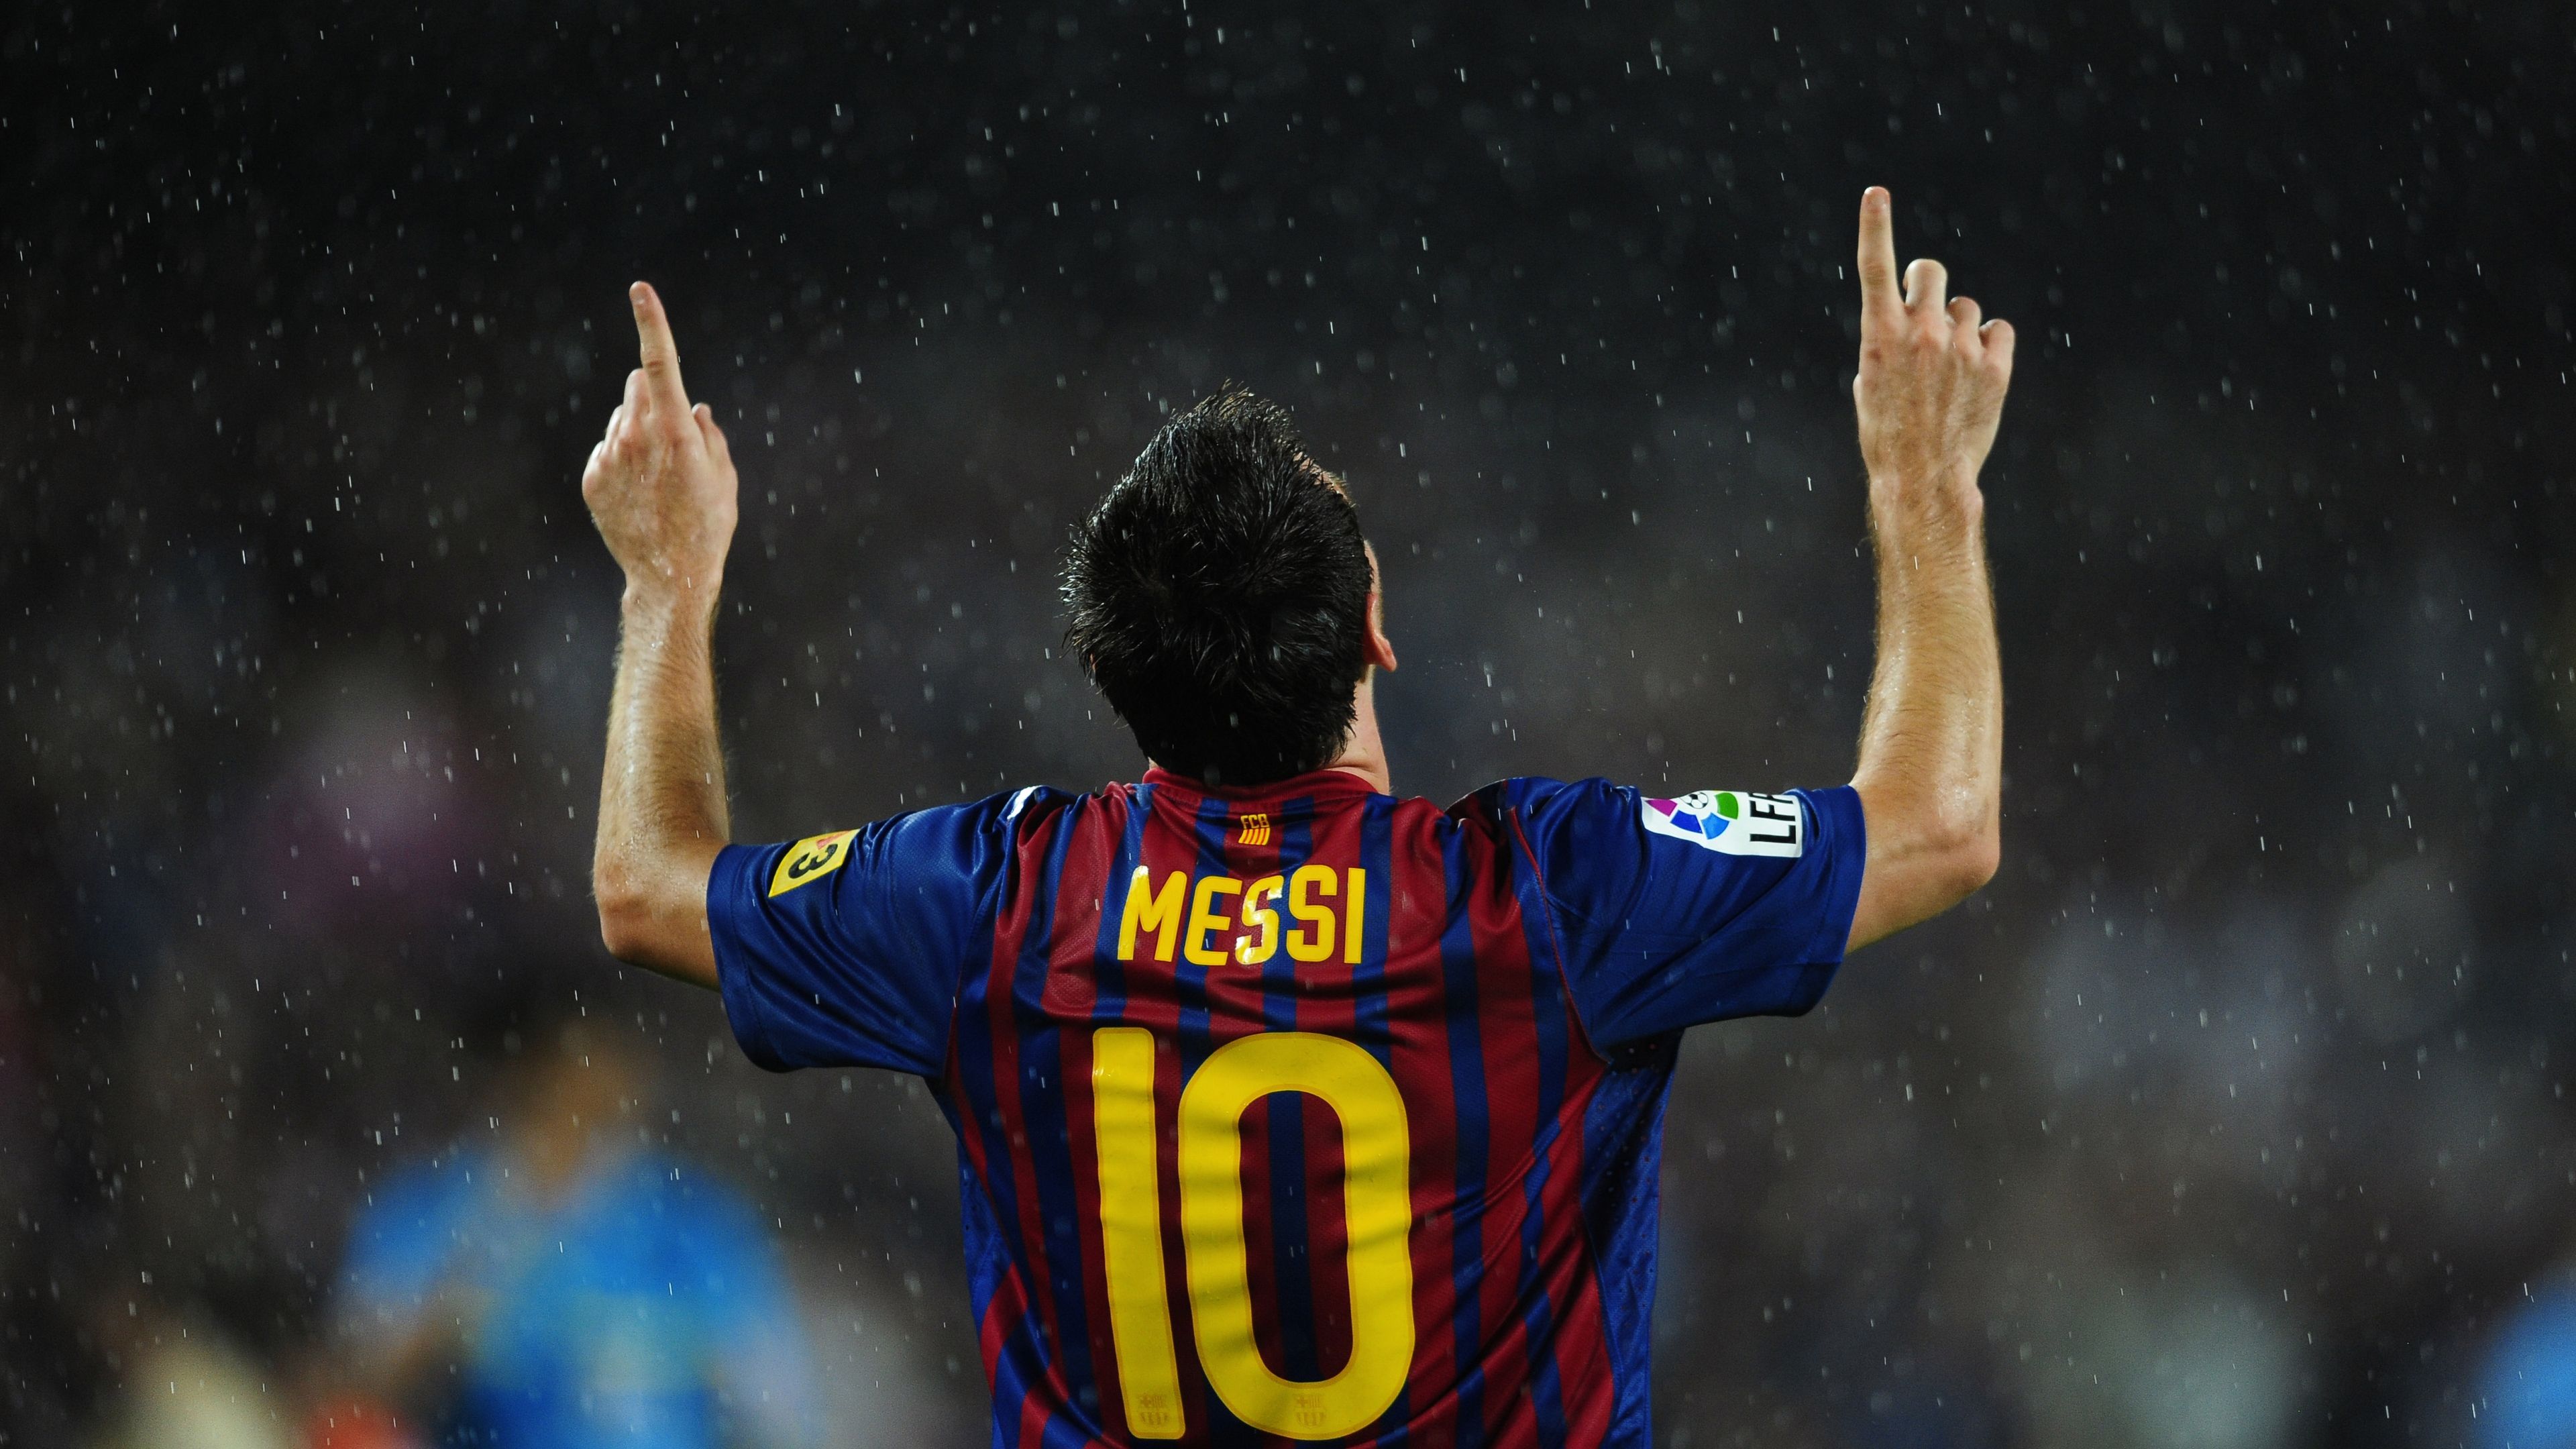 Lionel Messi in Rain 3840 x 2160 Ultra HD Wallpaper